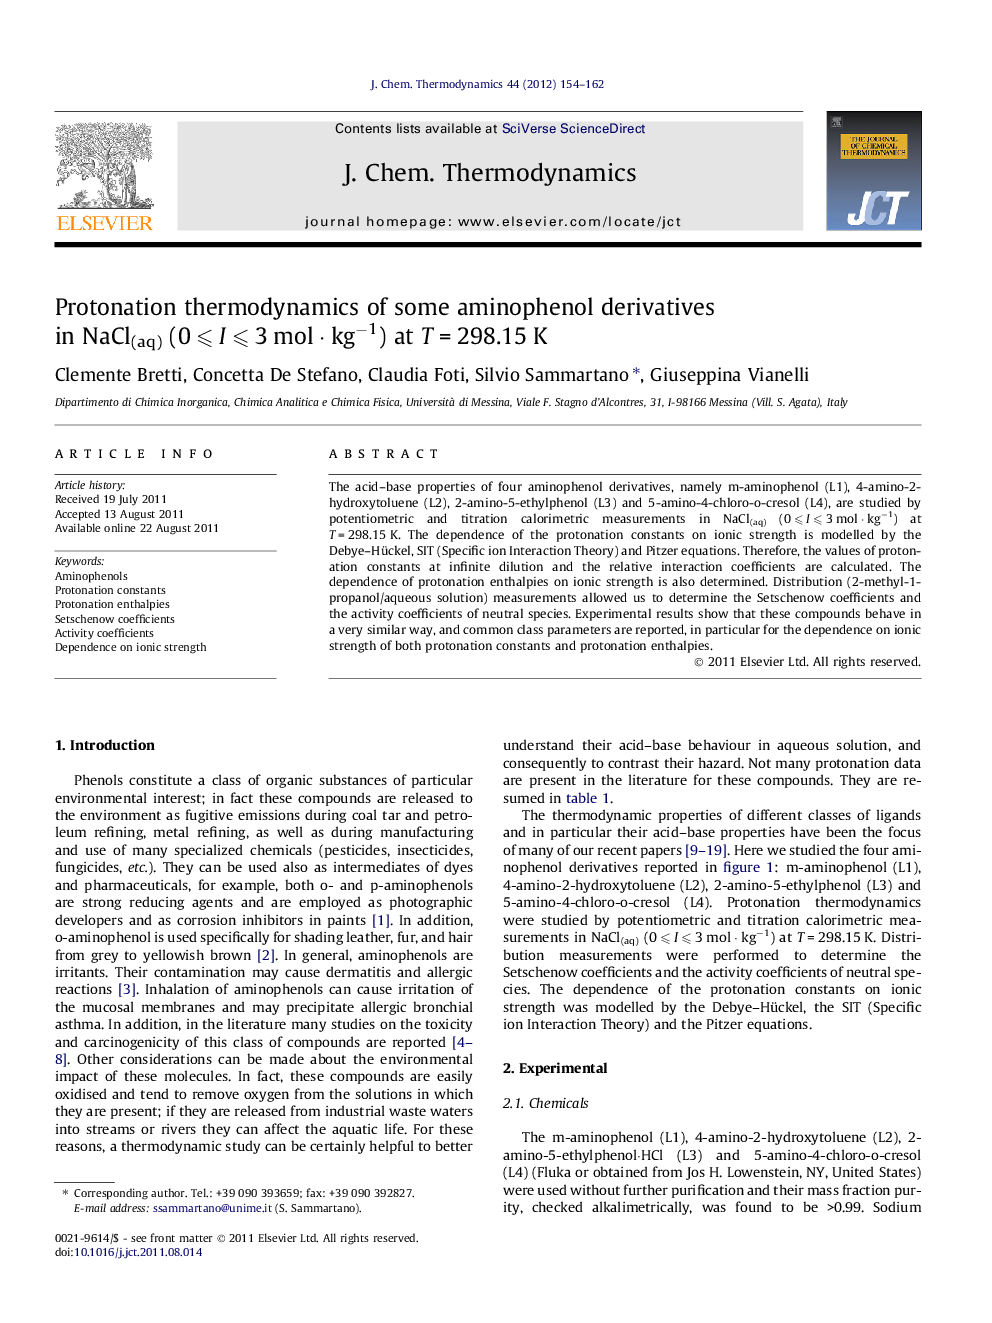 Protonation thermodynamics of some aminophenol derivatives in NaCl(aq) (0 ⩽ I ⩽3 mol · kg−1) at T = 298.15 K